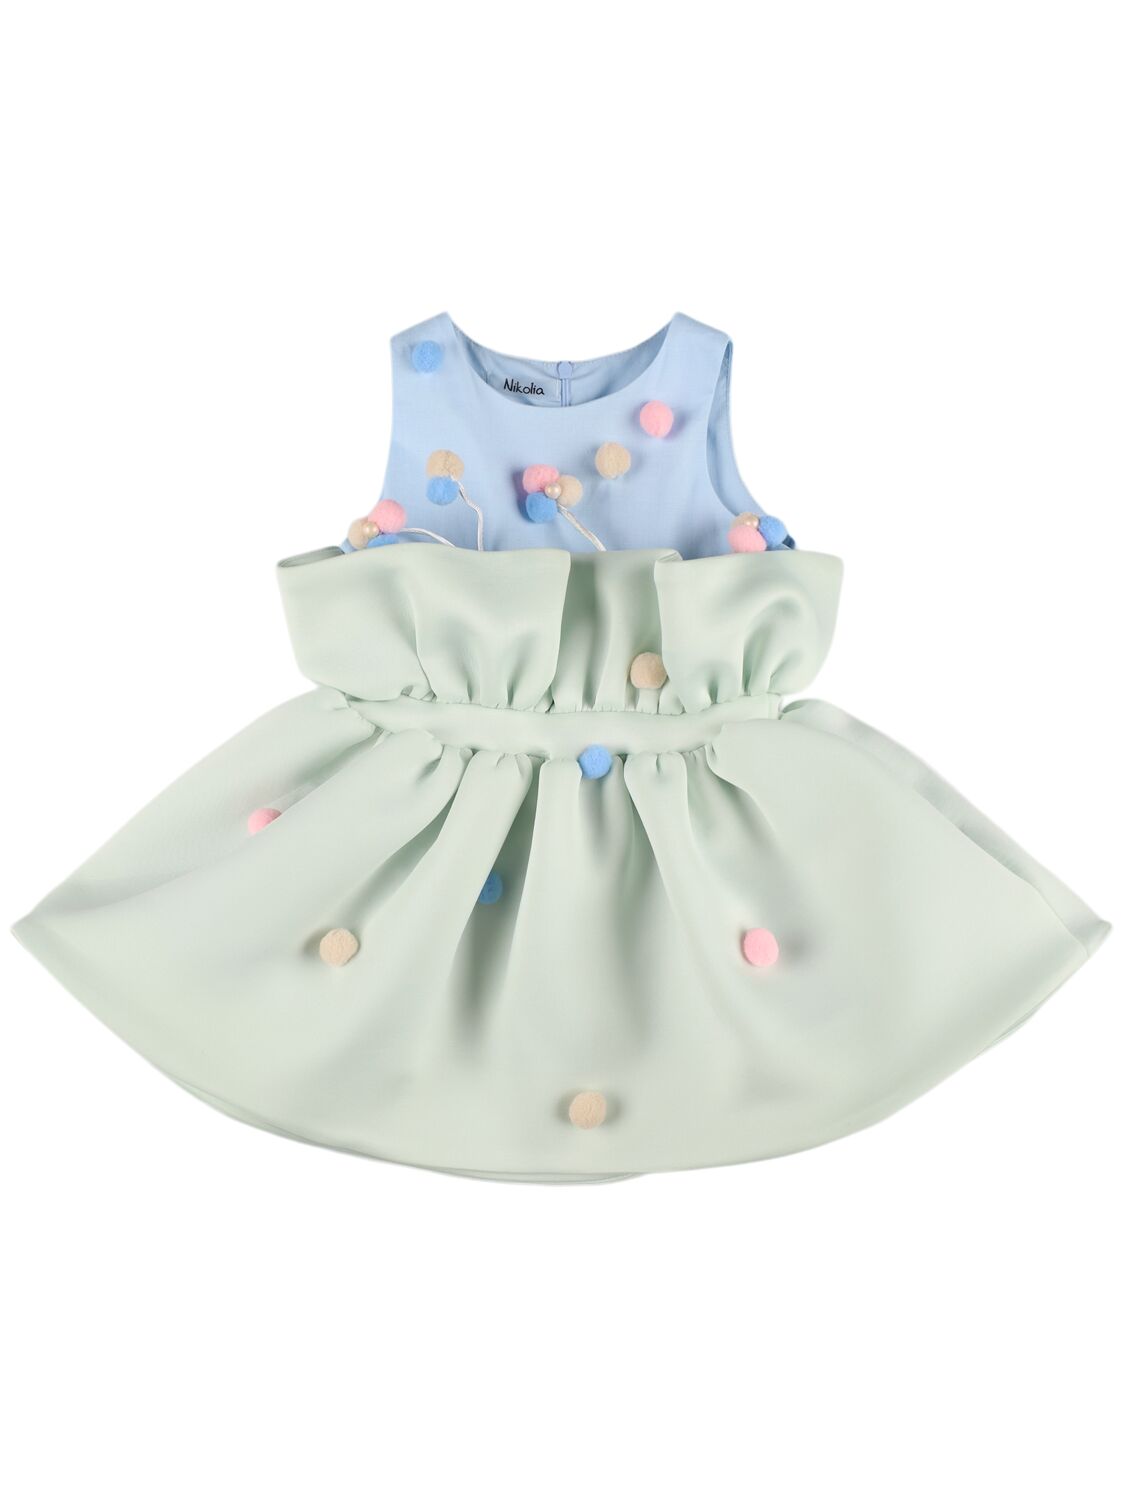 Nikolia Kids' Neoprene Dress W/ Appliqués In Blue,multi